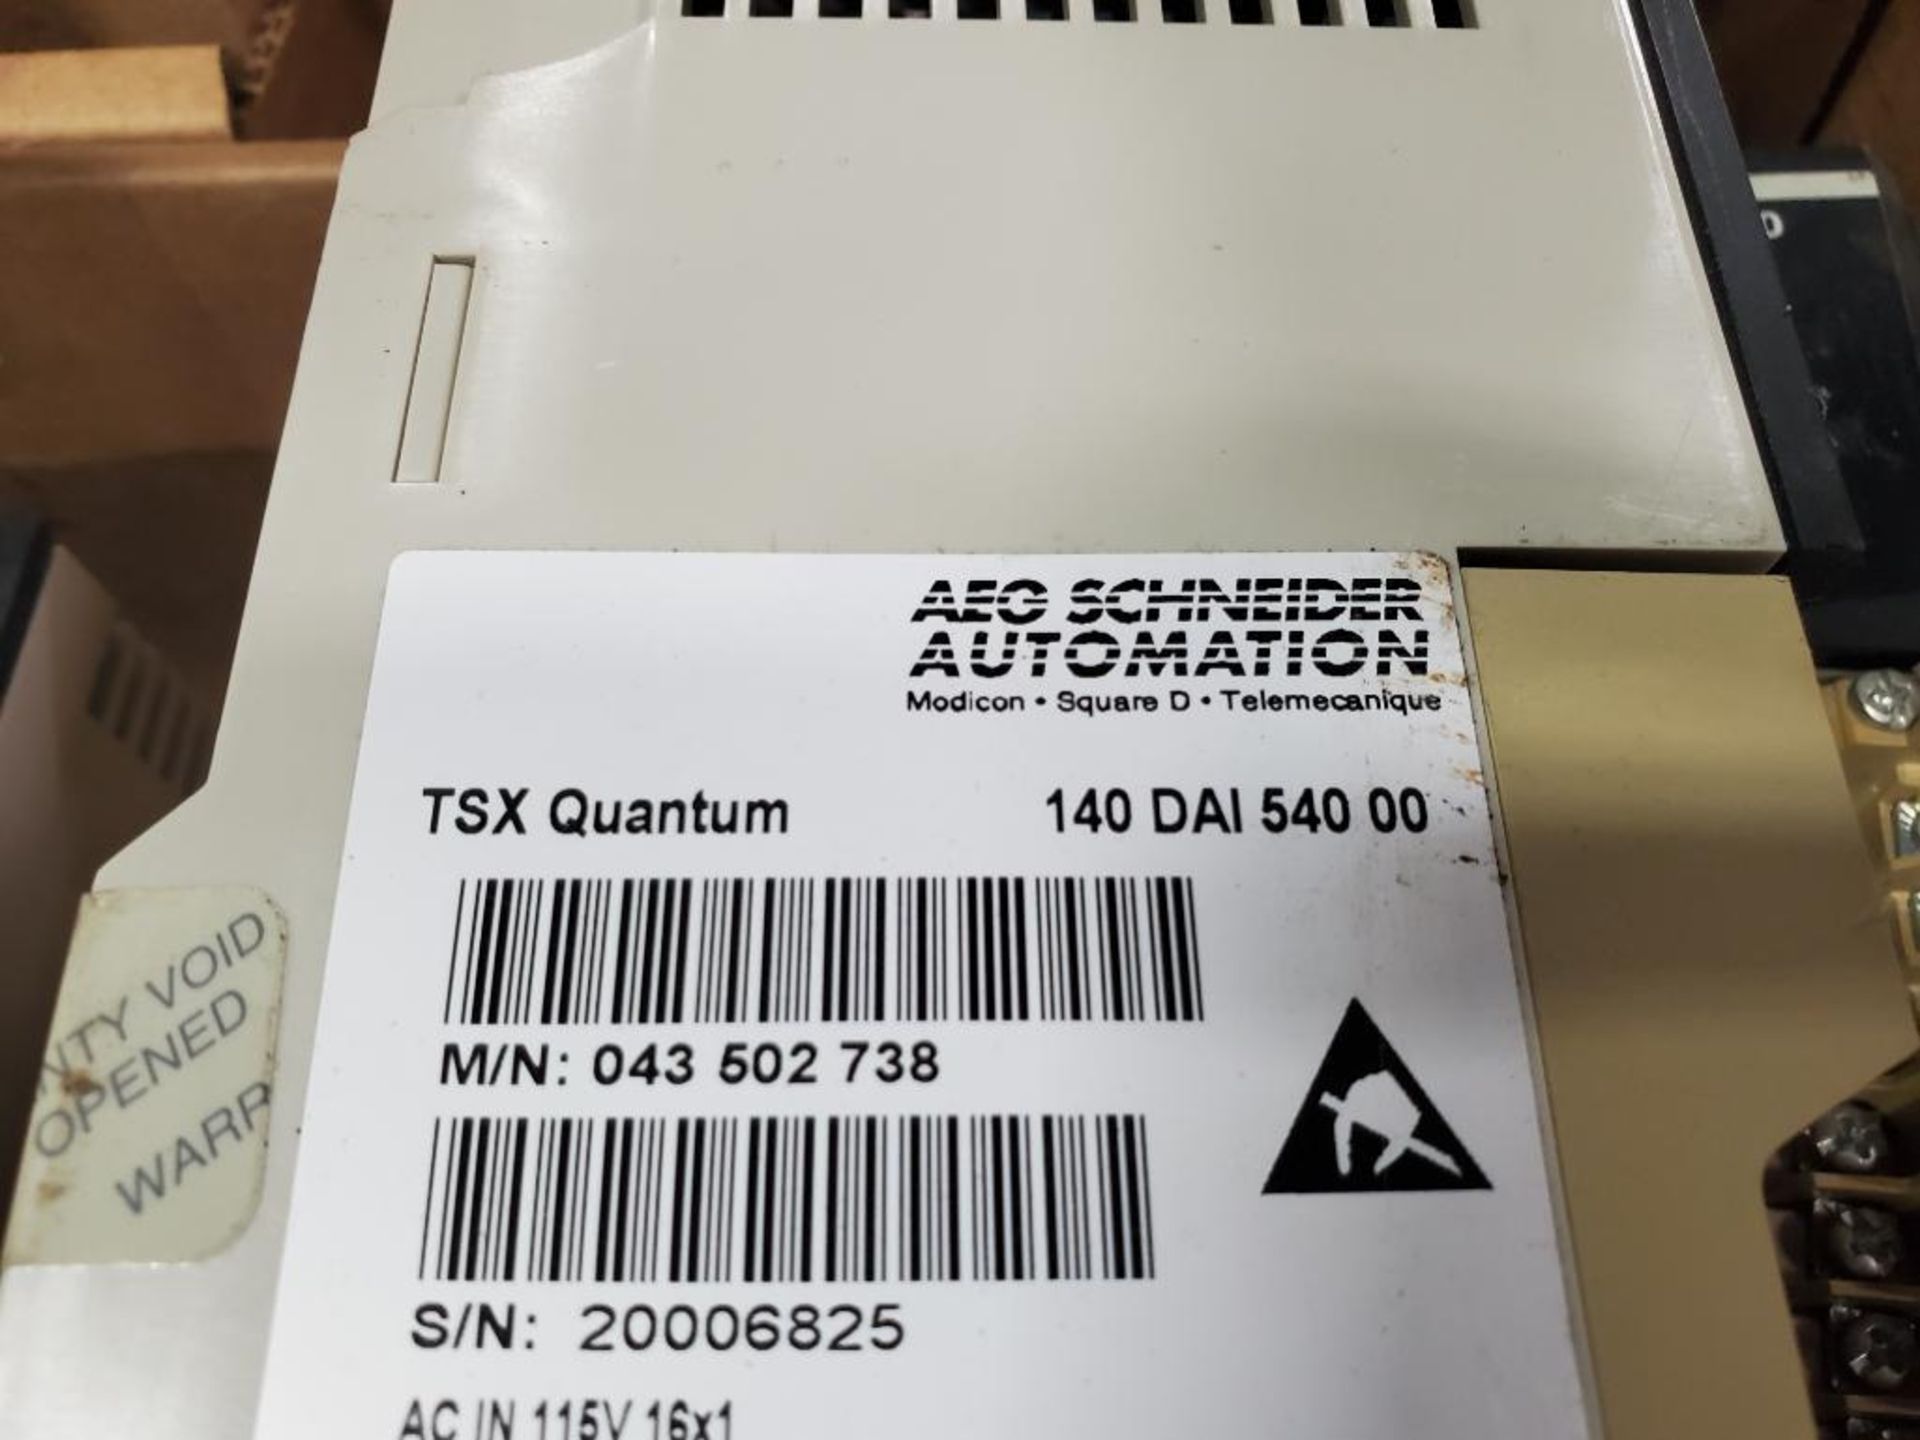 Qty 3 - Assorted AEG Schneider Automation module. TSX Quantum. - Image 5 of 5